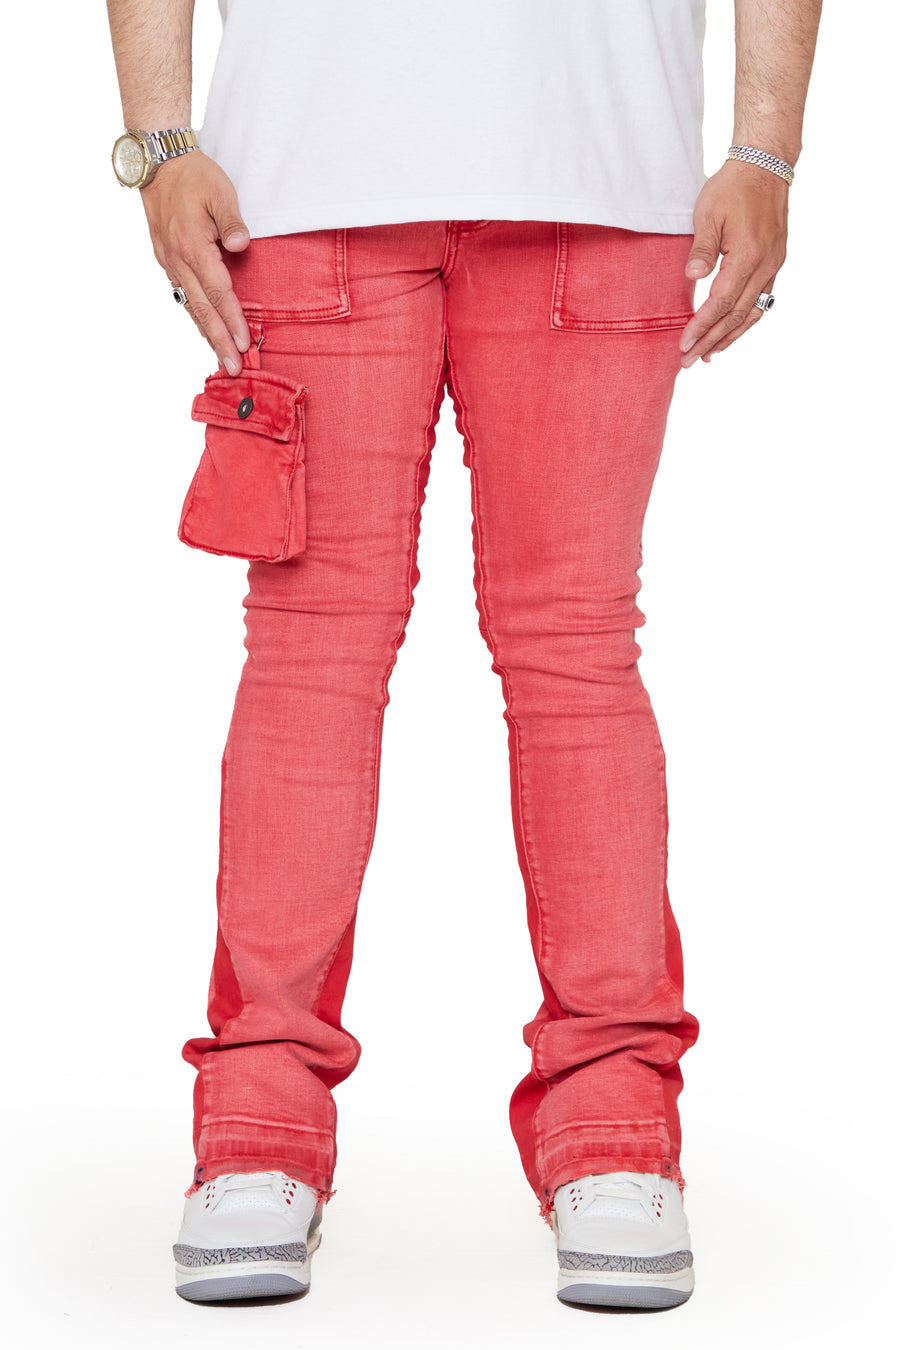 Buy VOI Jeans Men's Blood Red 100% Cotton Slim Fit Solid Half